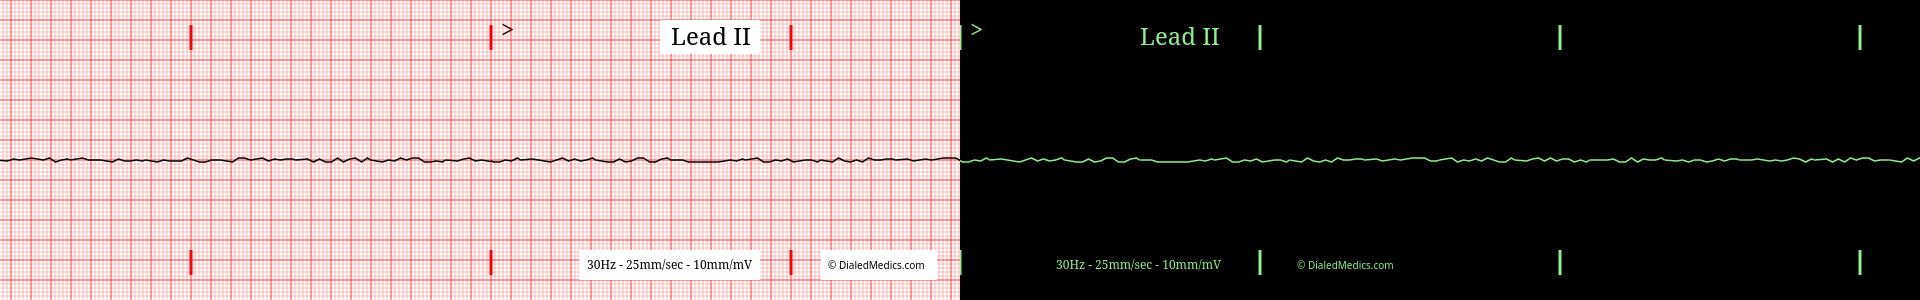 EKG graph display vs. EKG monitor display.